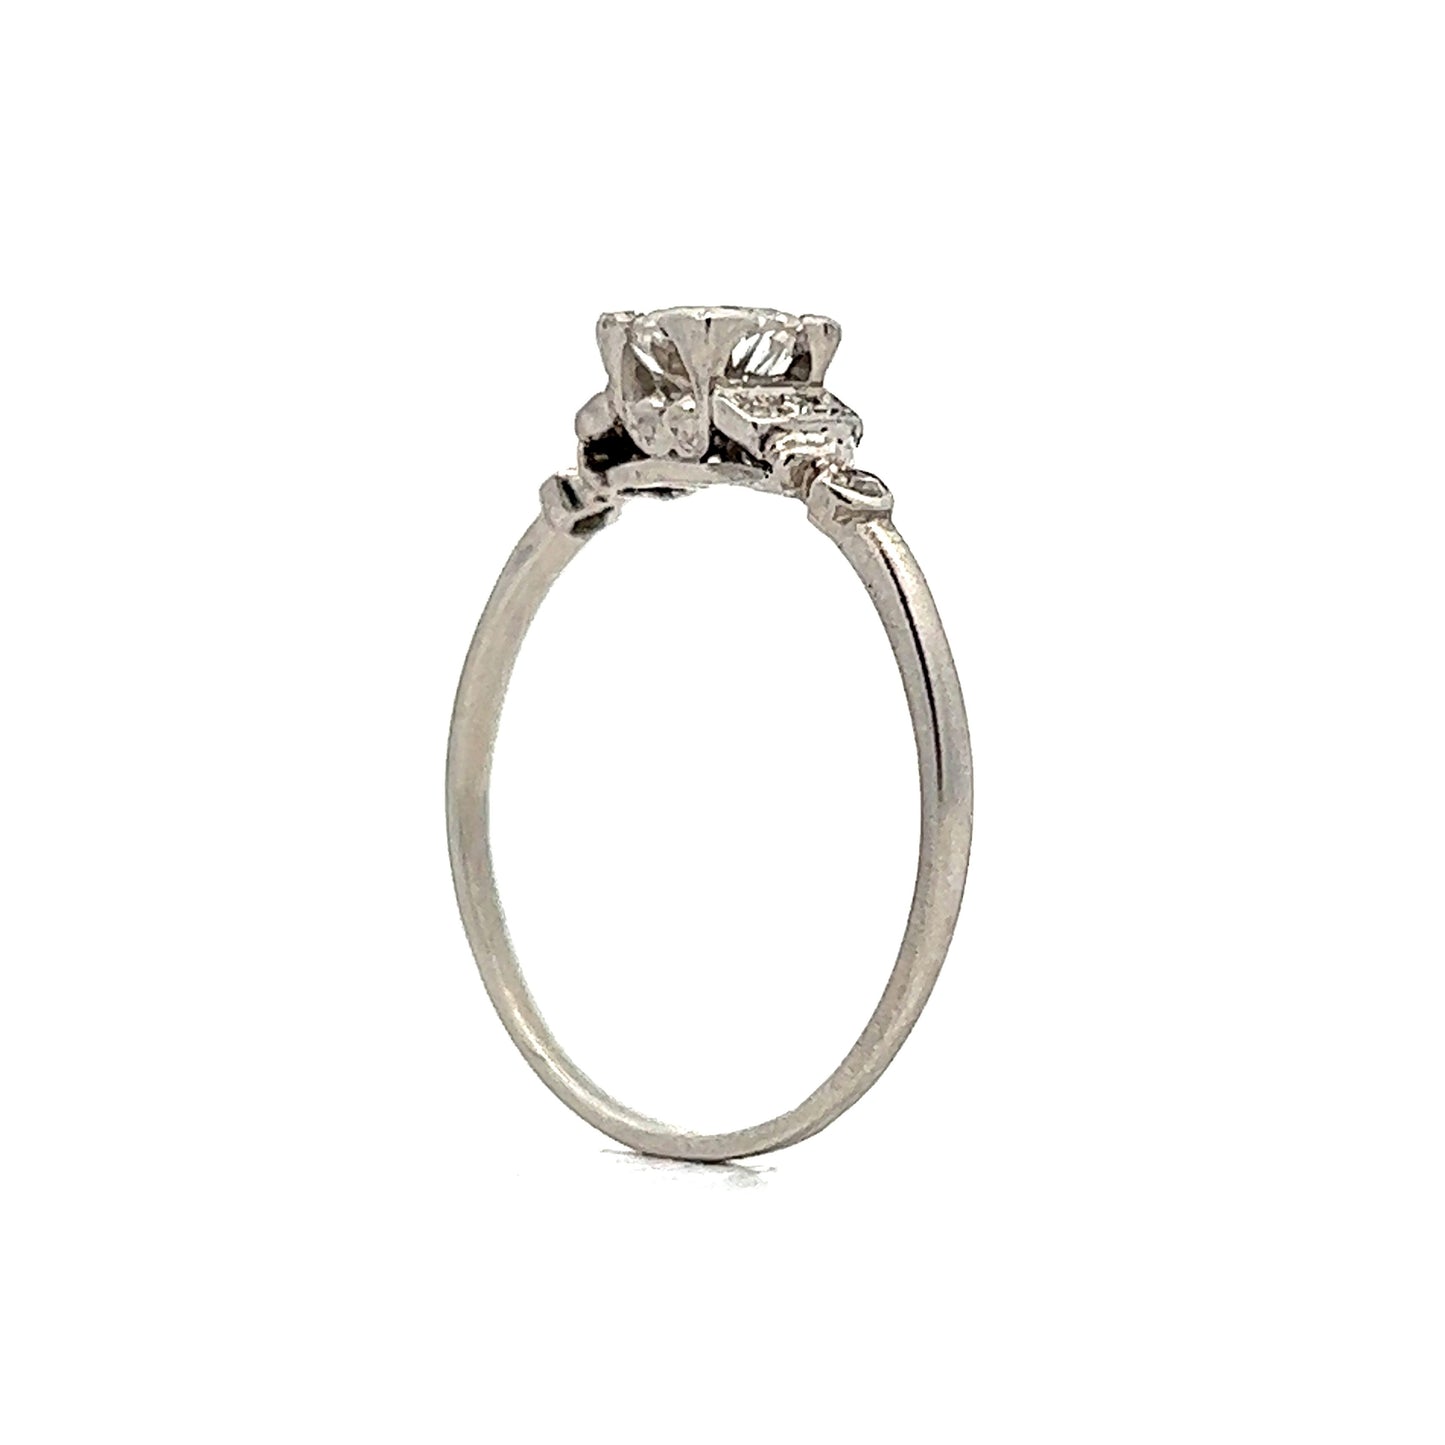 .60 Vintage Art Deco Engagement Ring in Platinum